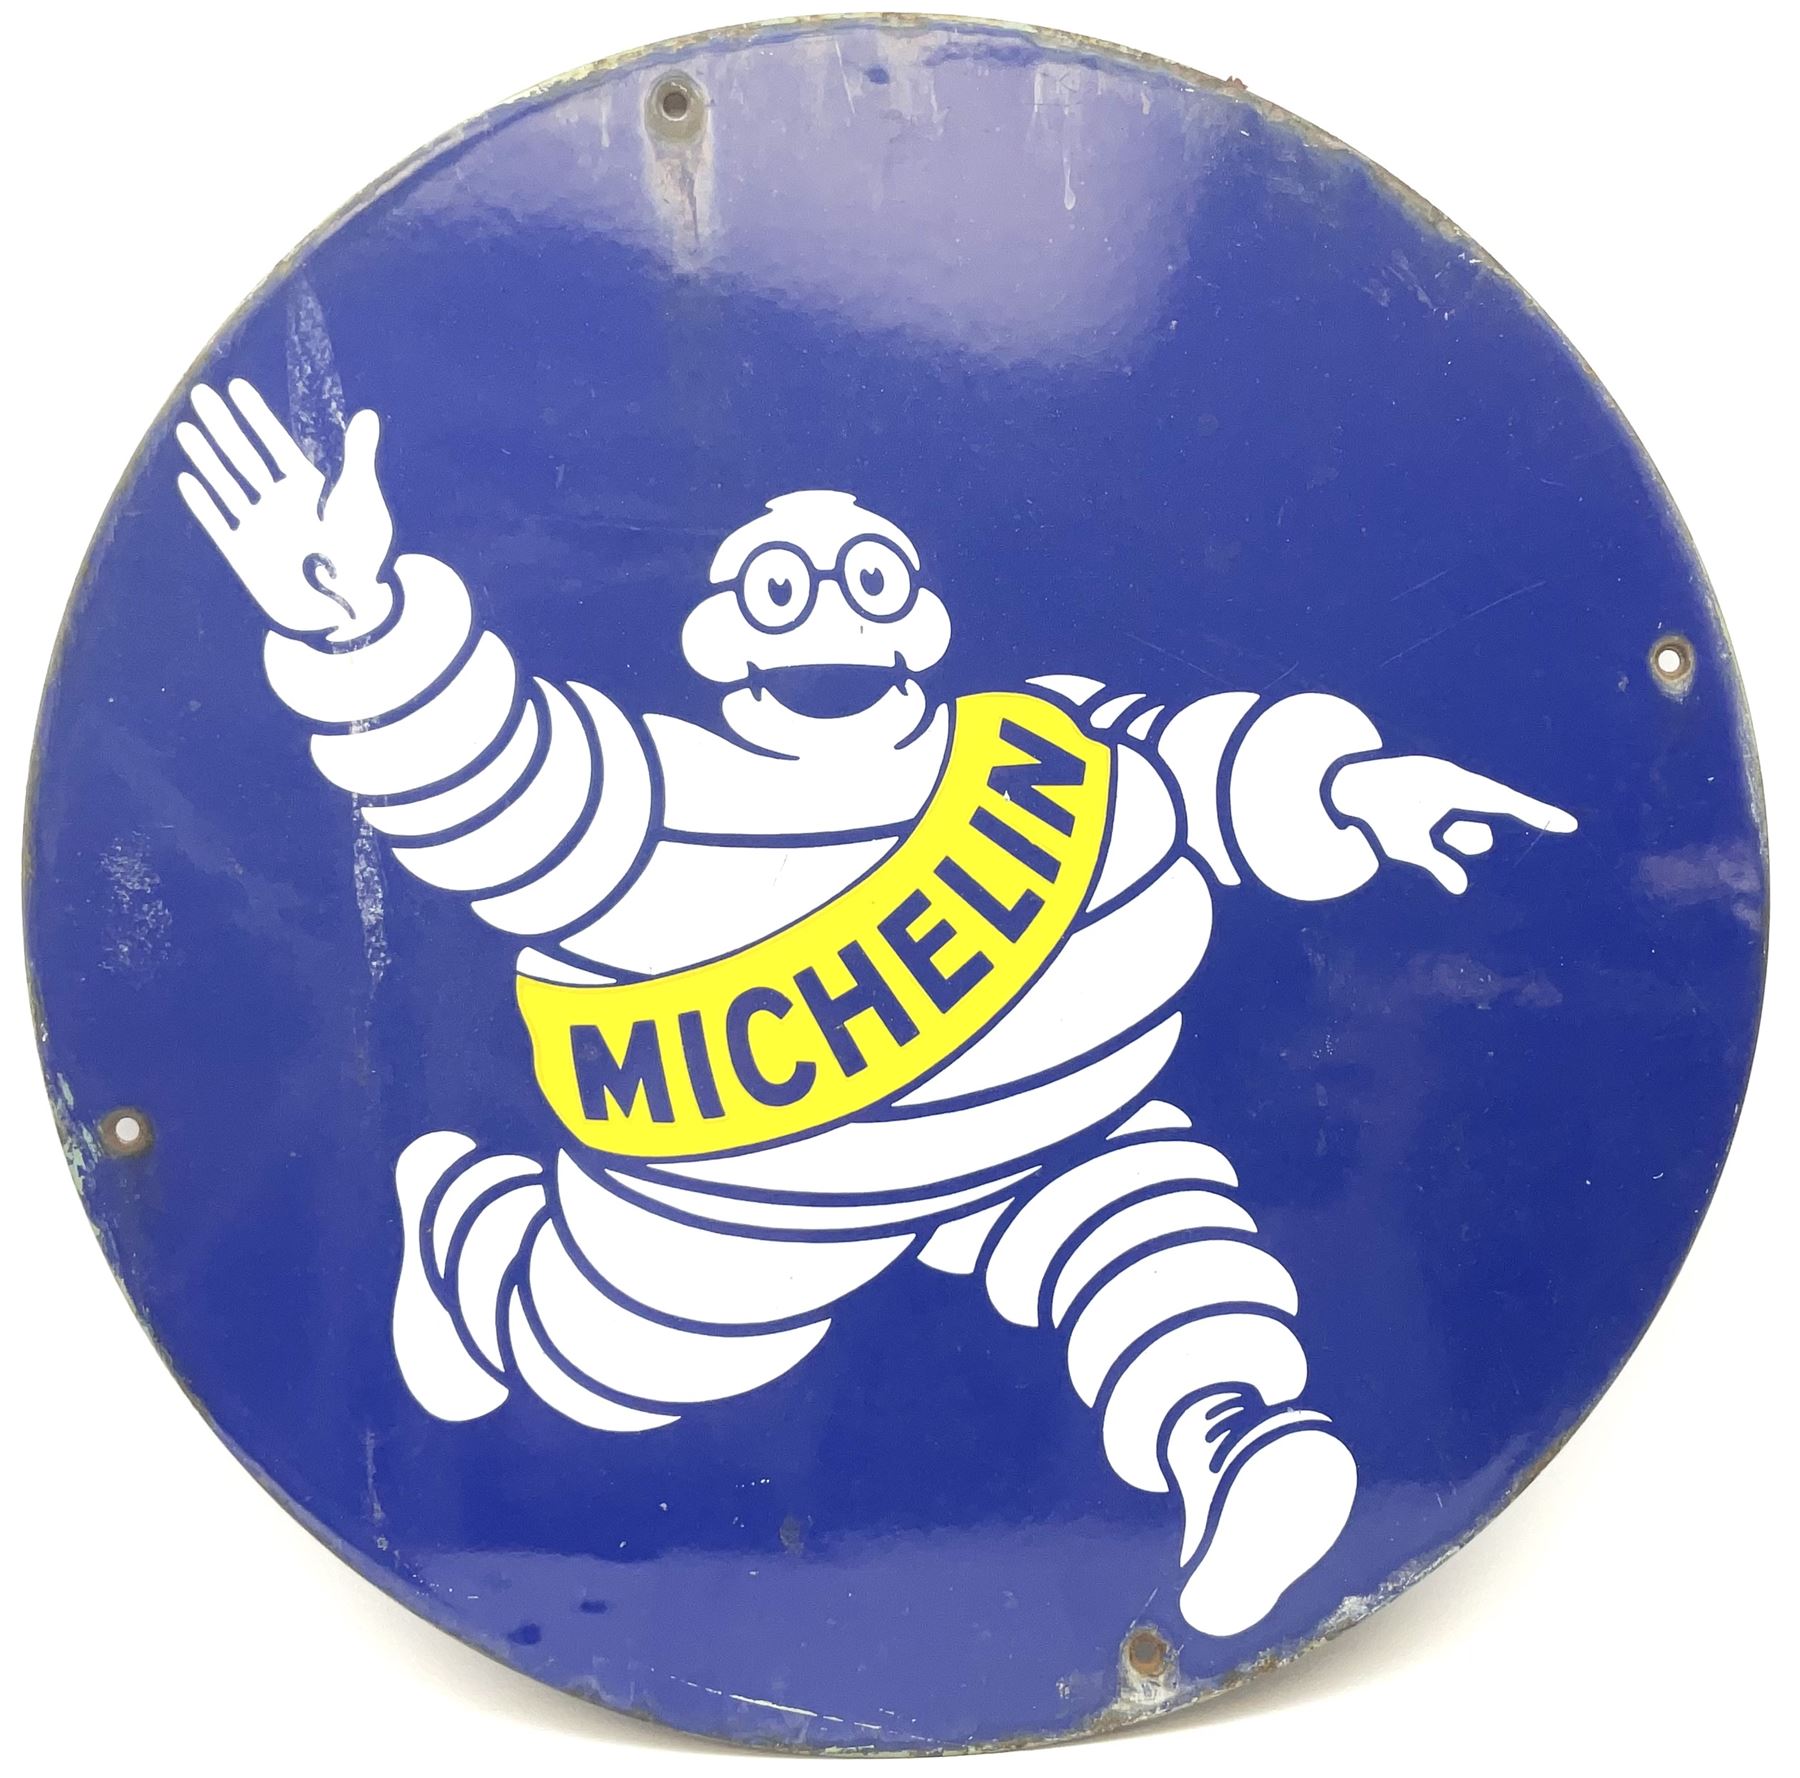 Vintage Michelin enamel advertising sign